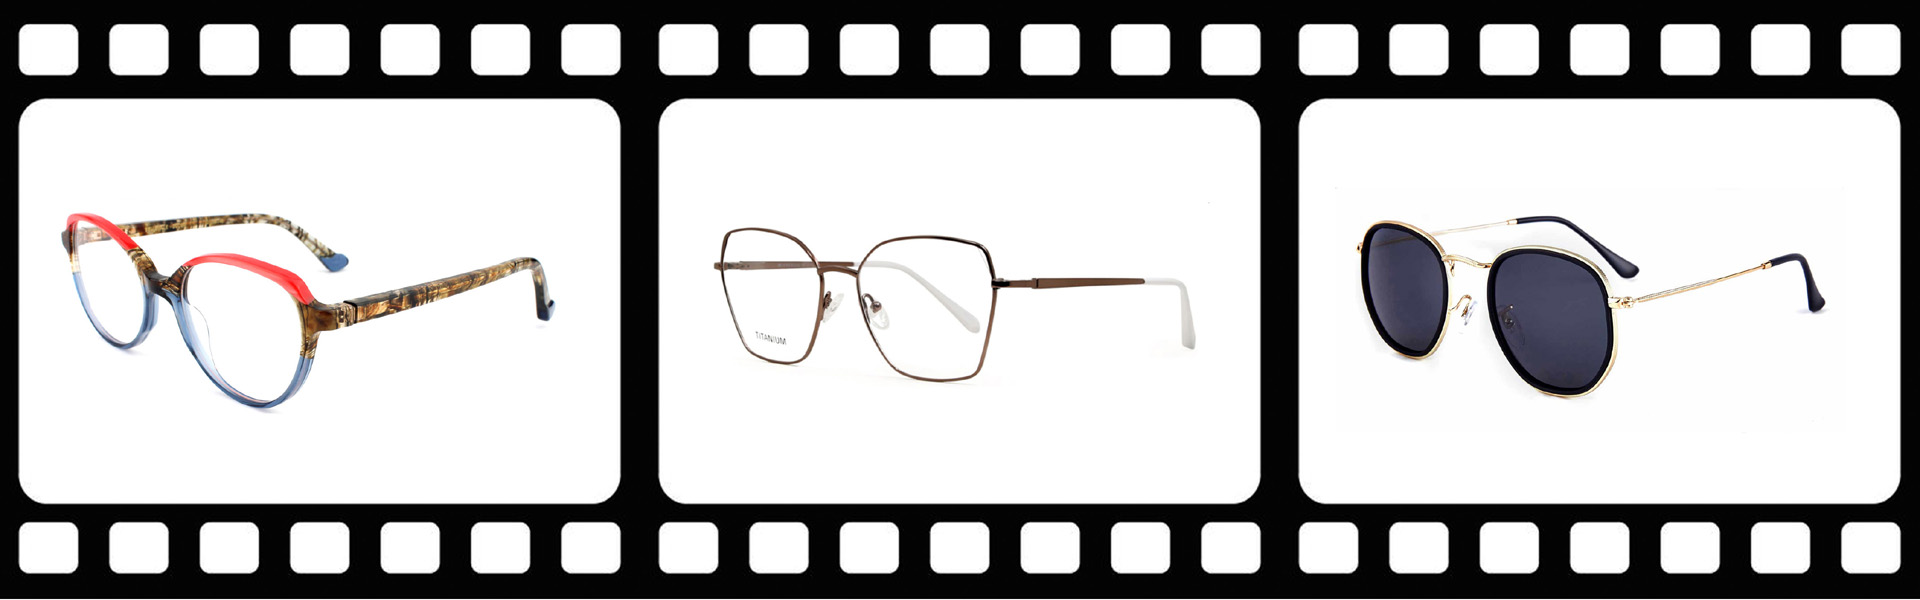 ochelari de stoc gata, ochelari, ochelari de stoc gata,Wenzhou Ruite Optics Co.,Ltd